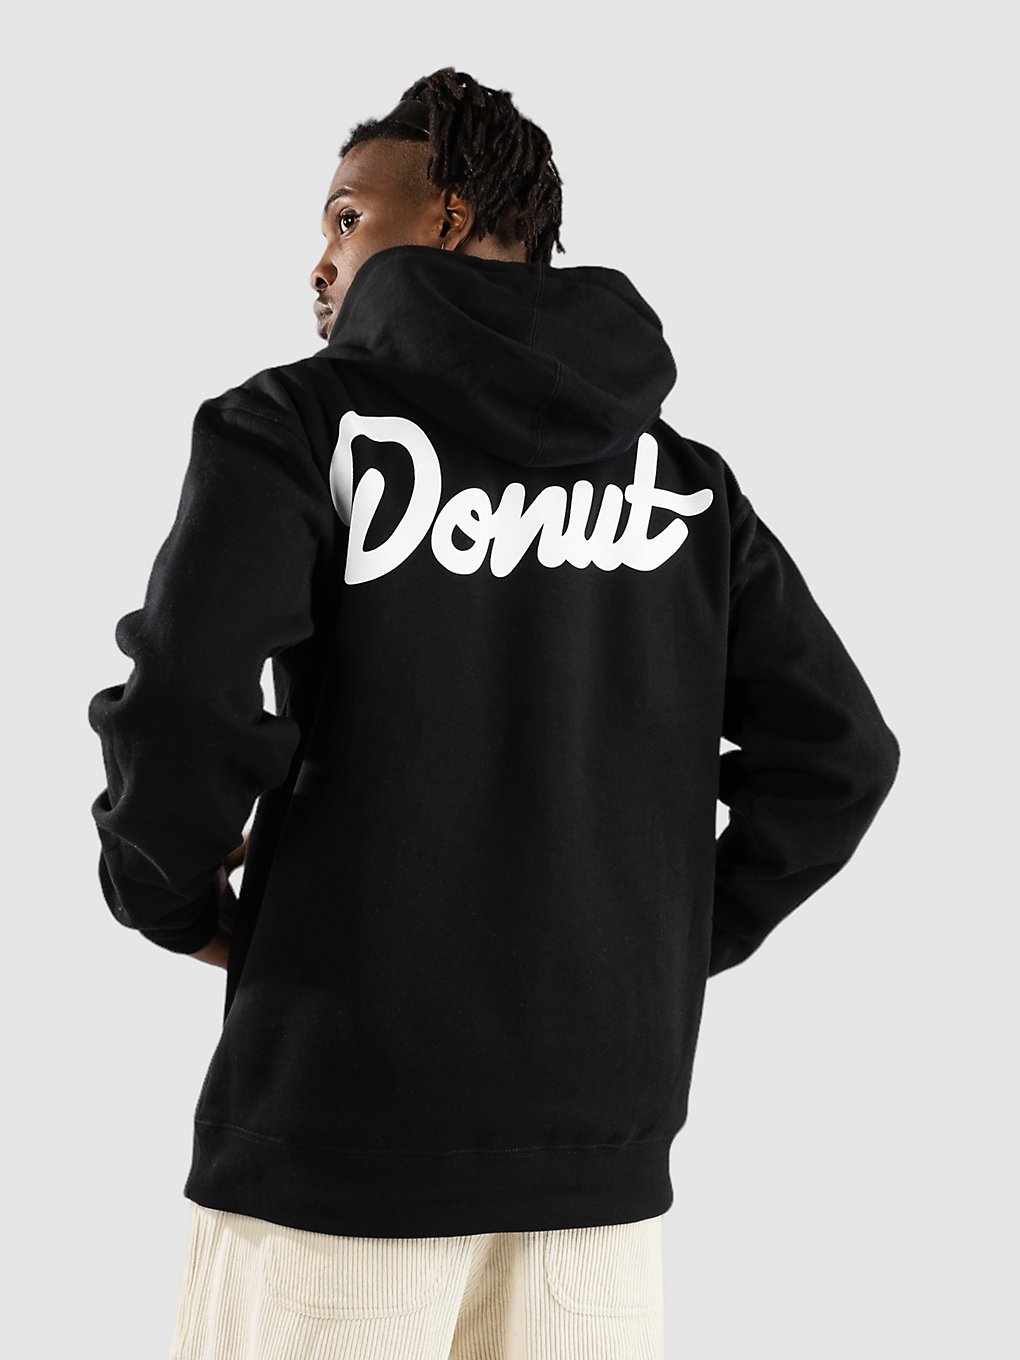 Donut Og Logo Sweater black kaufen